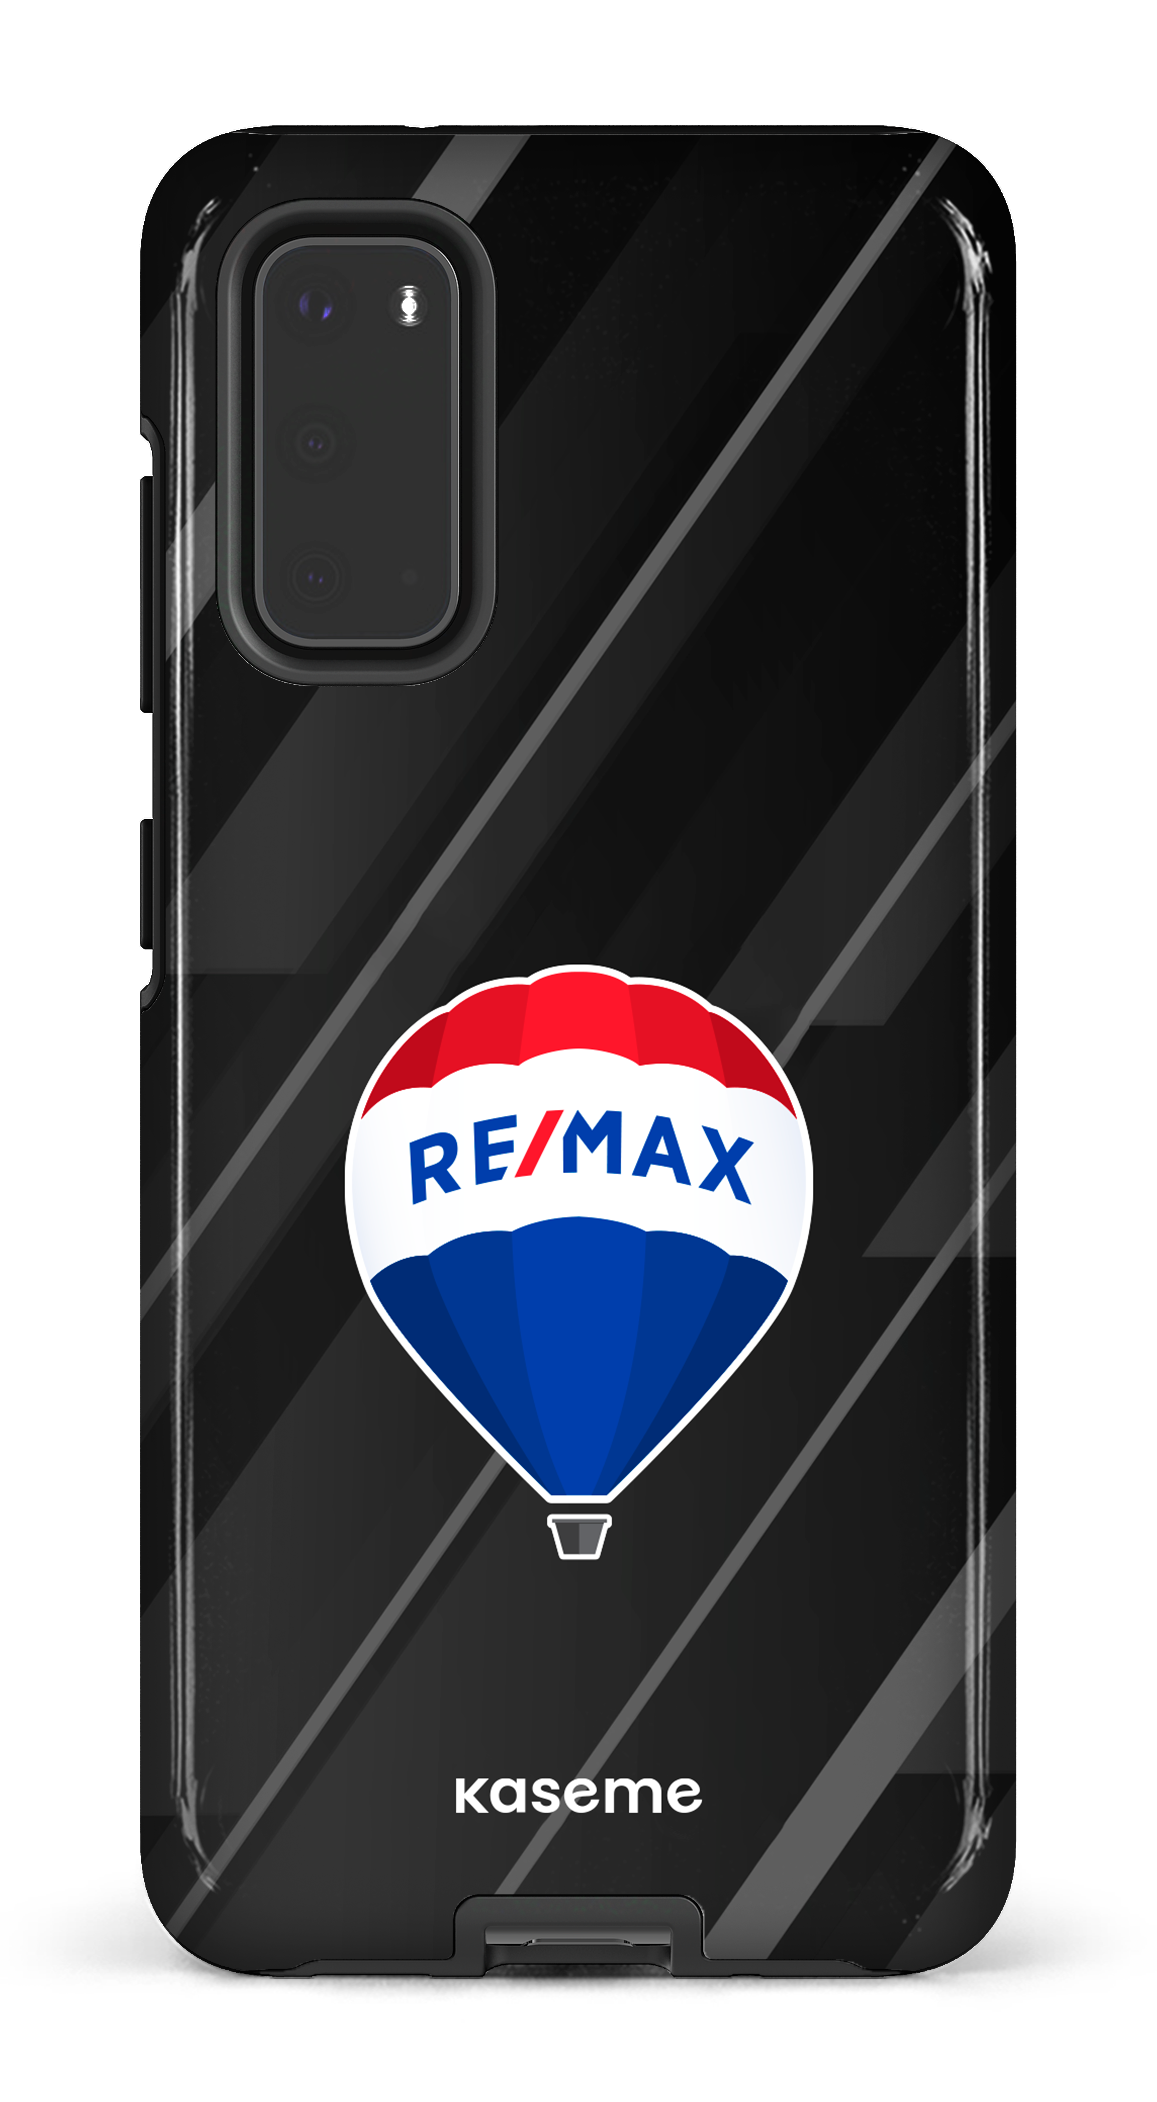 Remax Noir - Galaxy S20